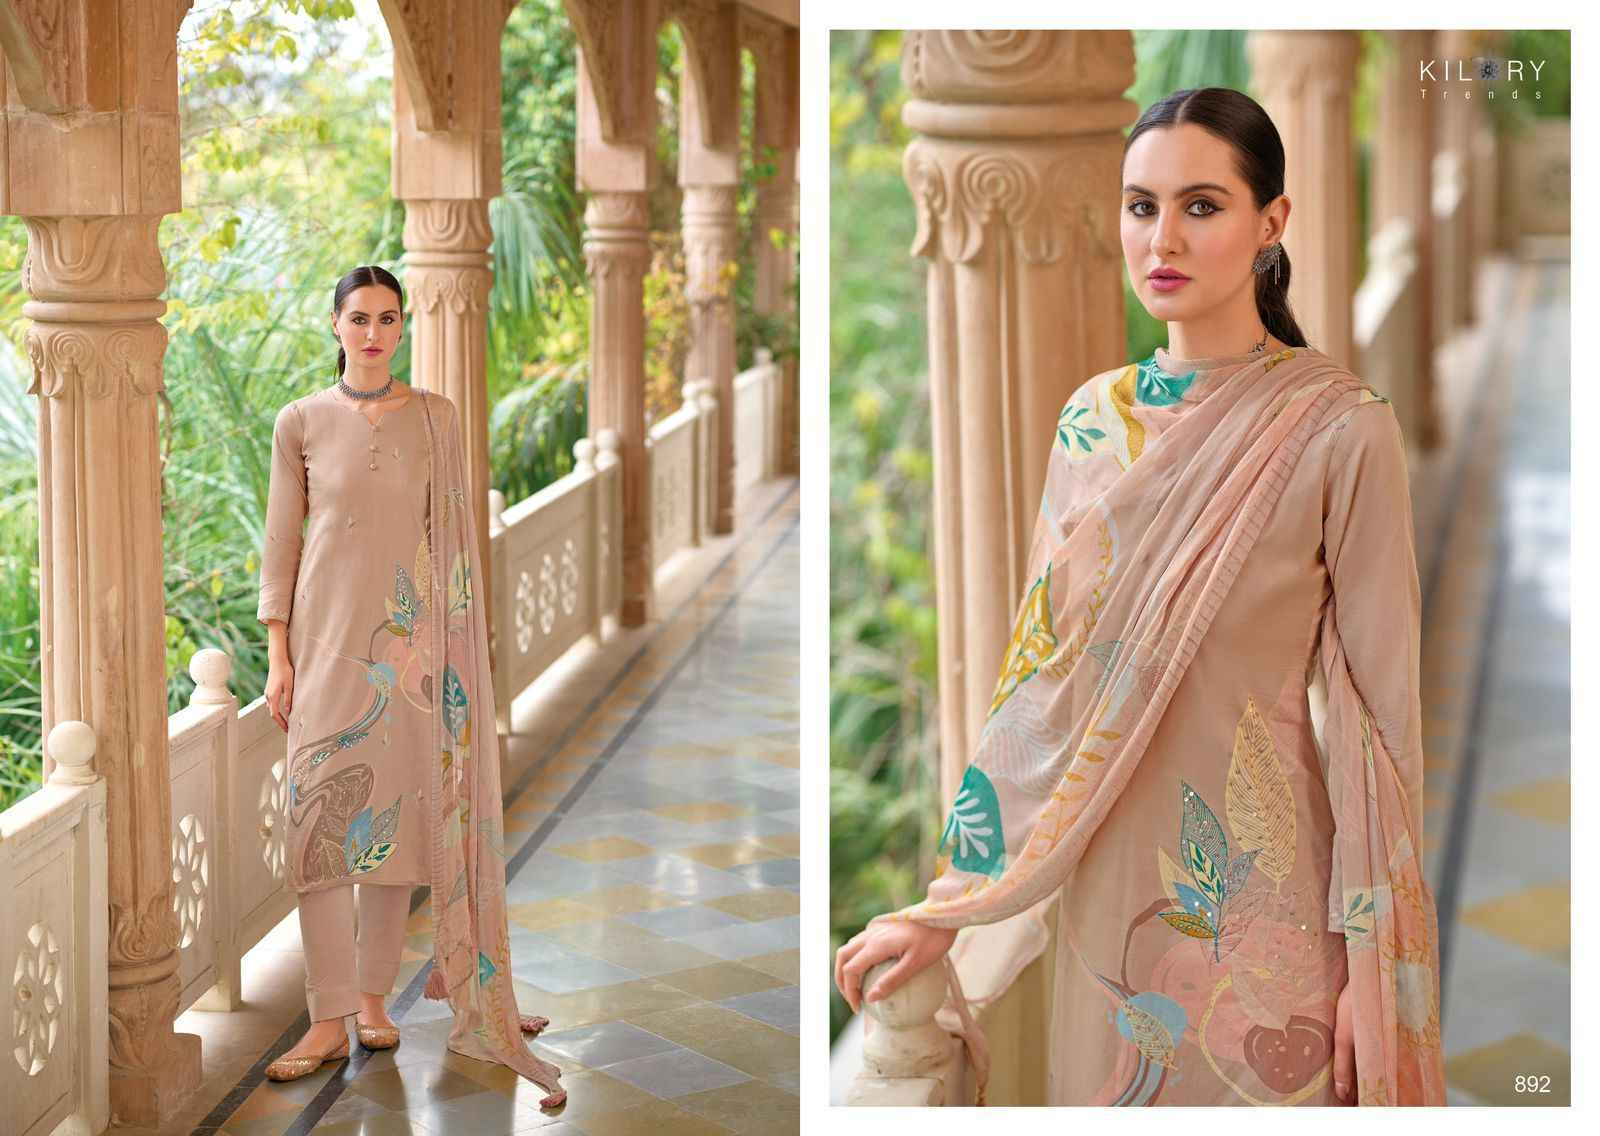 Kilory Trends Rozana Cotton Dress Material 8 pcs Catalogue